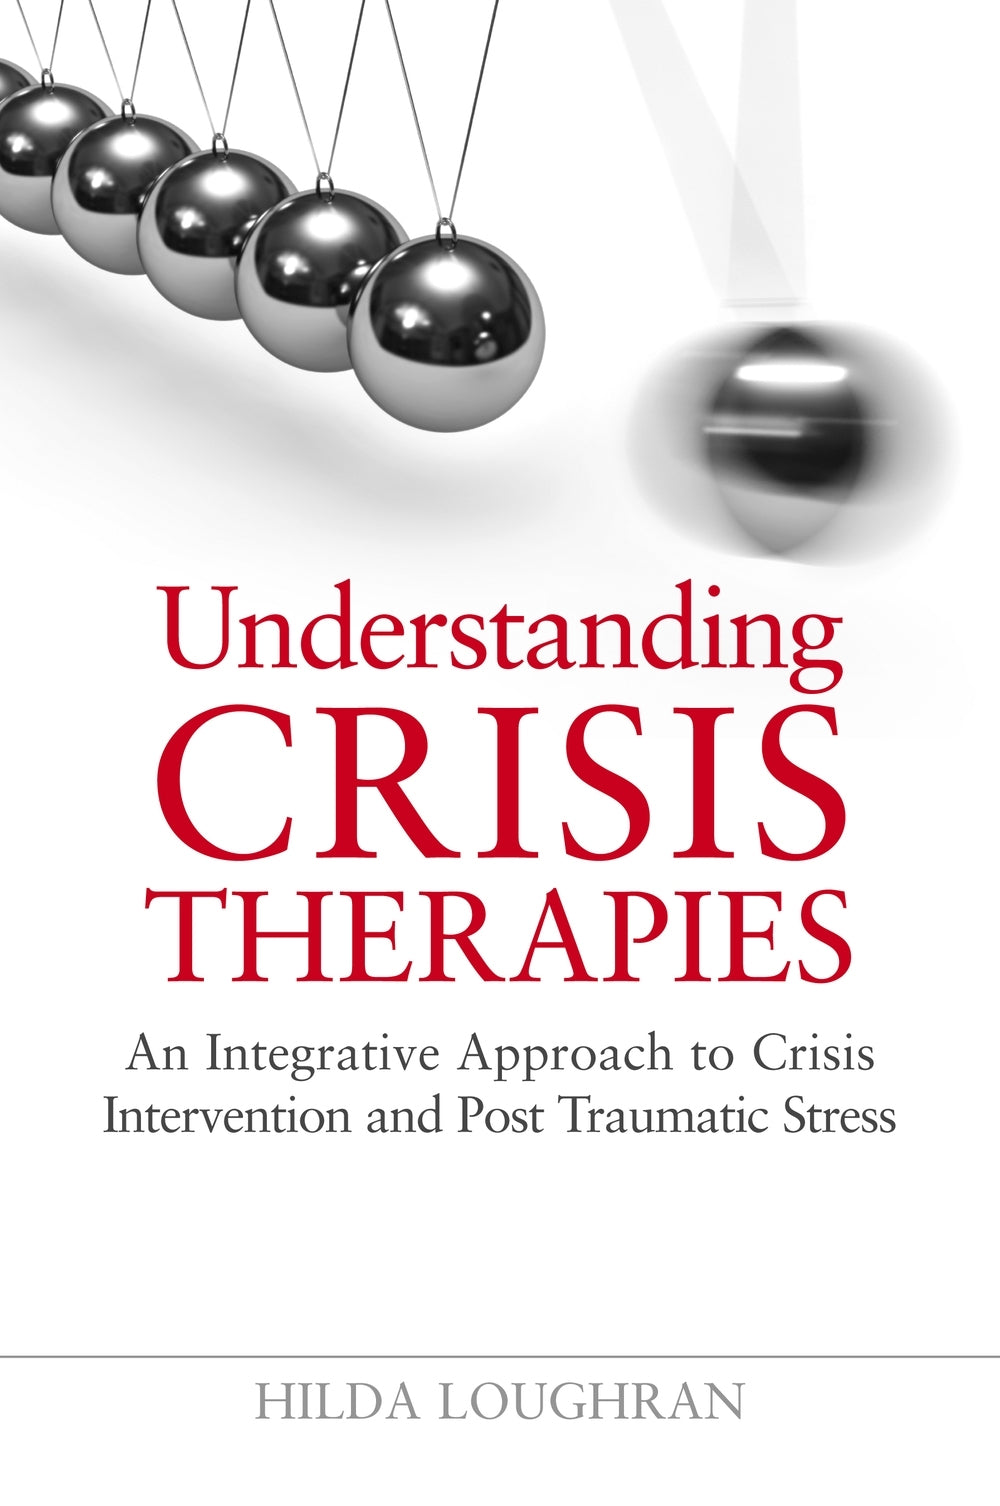 Understanding Crisis Therapies by Hilda Loughran